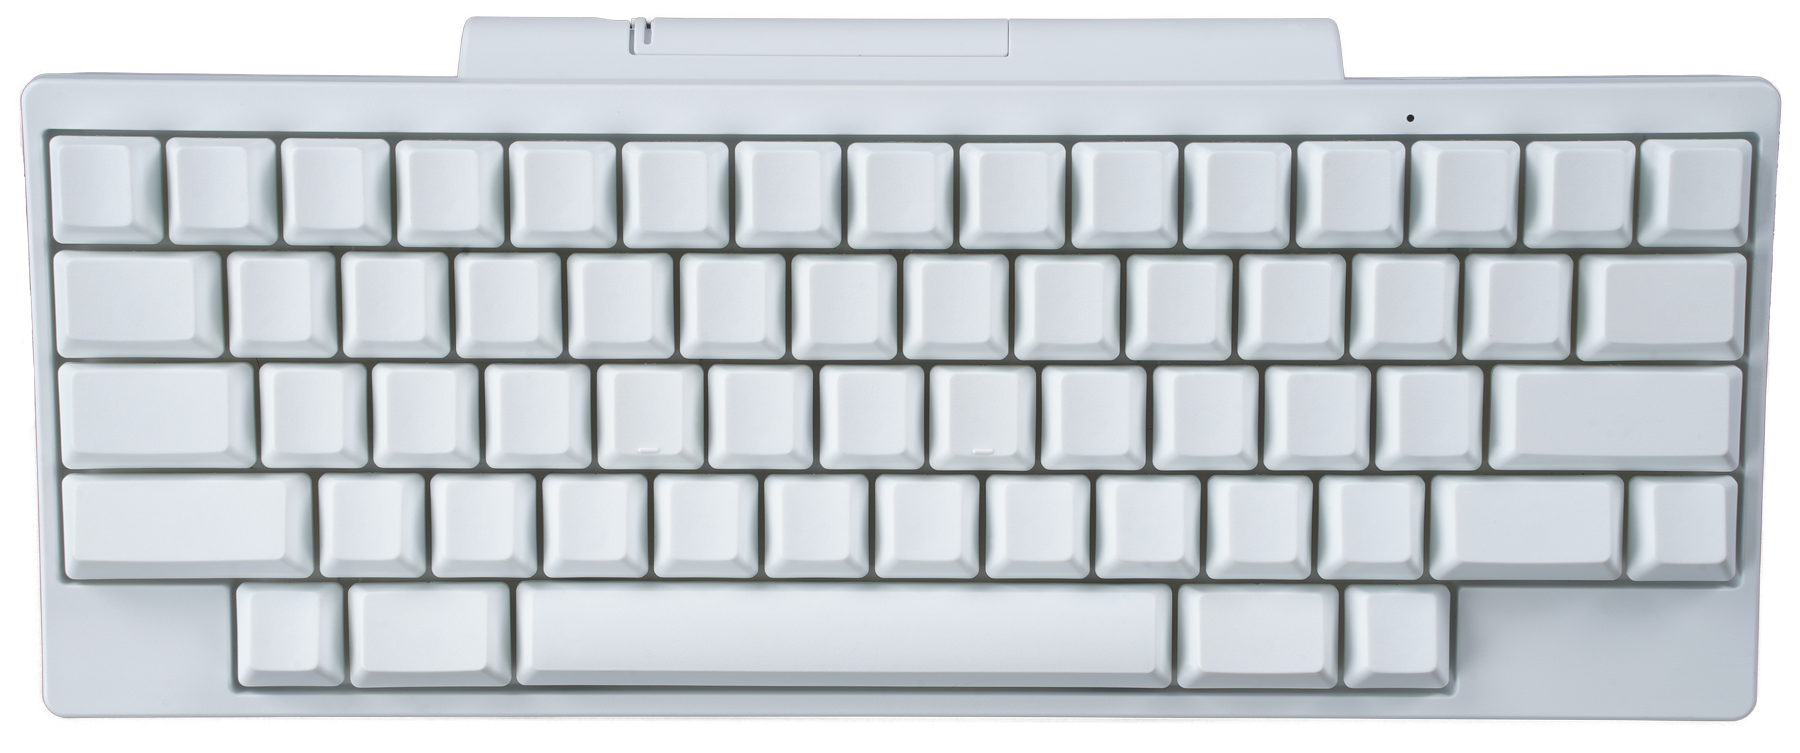 HHKB HYBRID Type S Snow blank keyboard